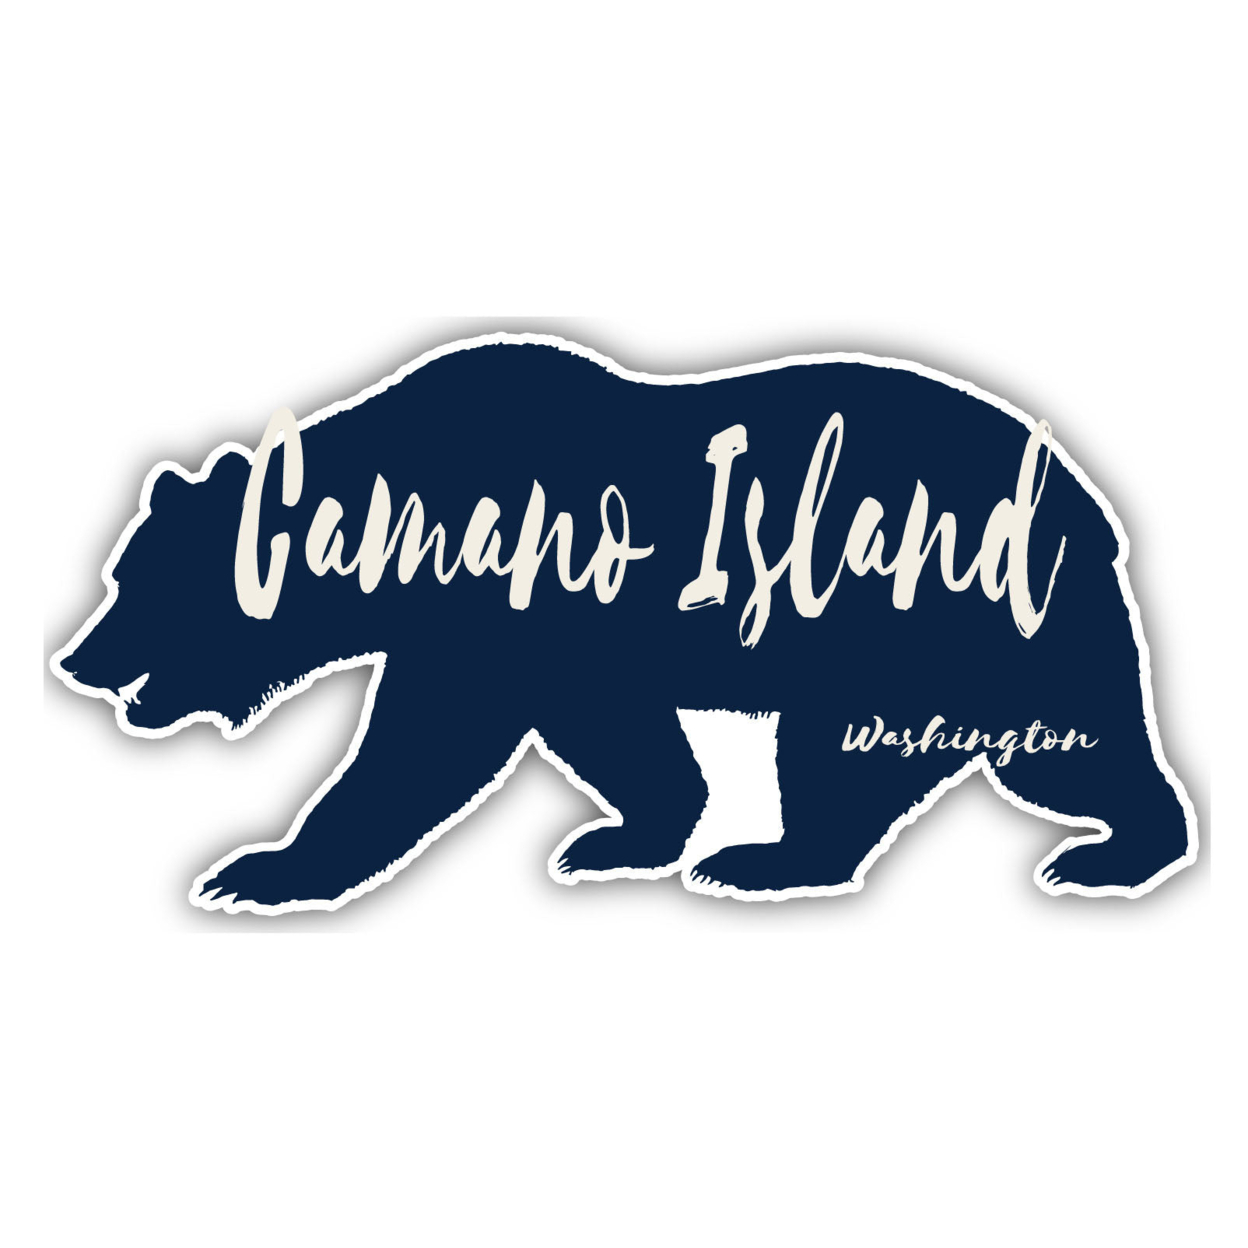 Camano Island Washington Souvenir Decorative Stickers (Choose Theme And Size) - Single Unit, 8-Inch, Tent